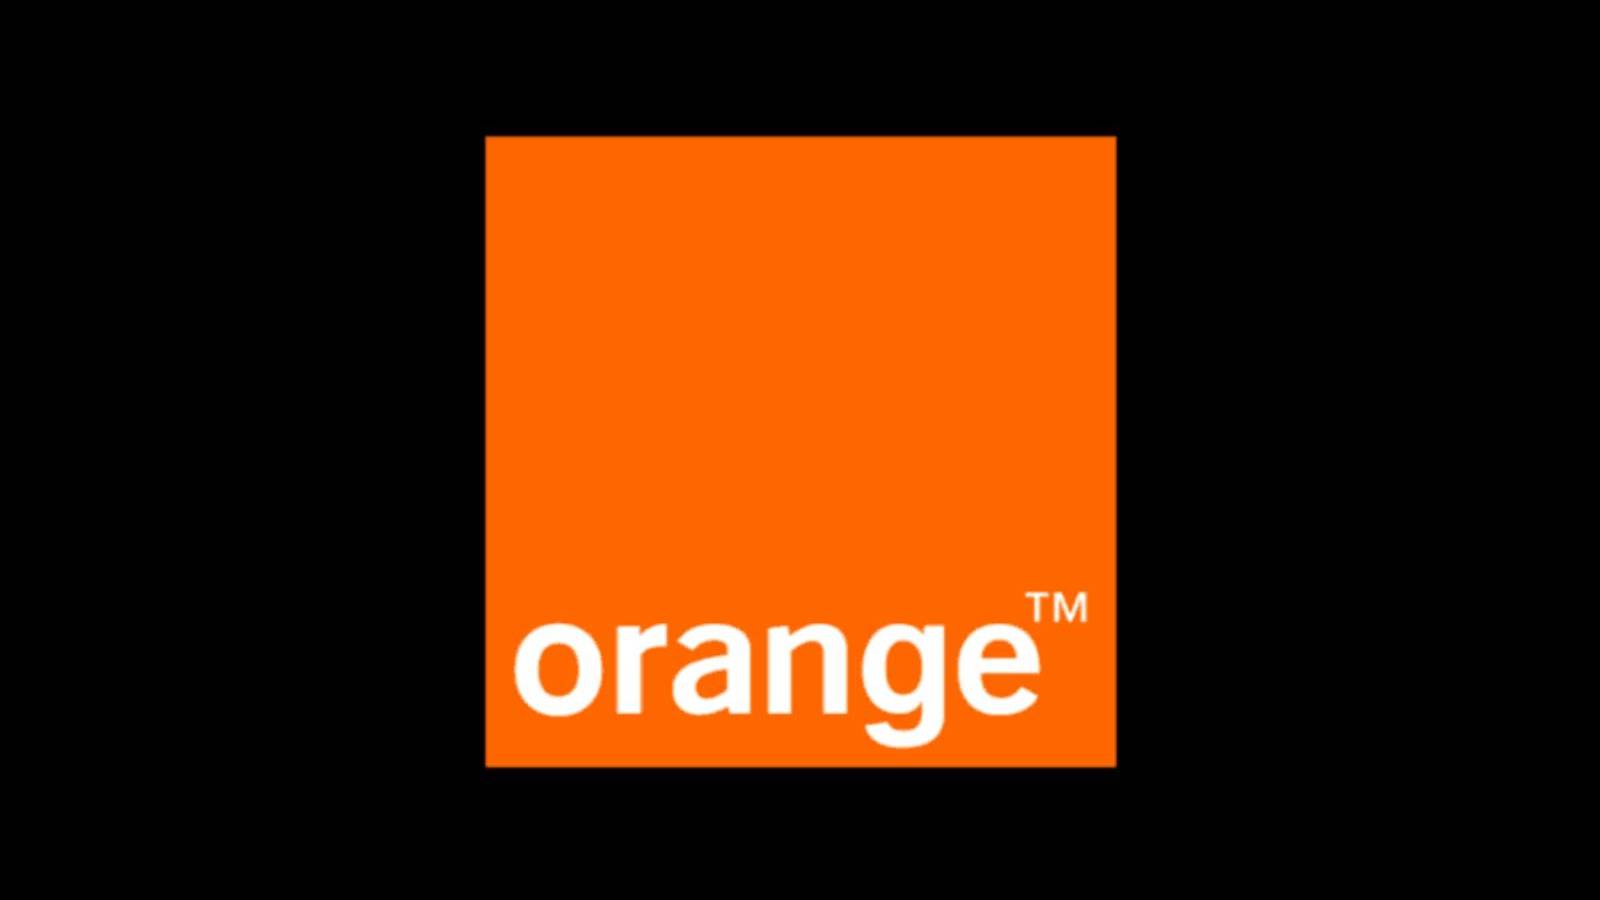 ad orange playstation 5 gratis